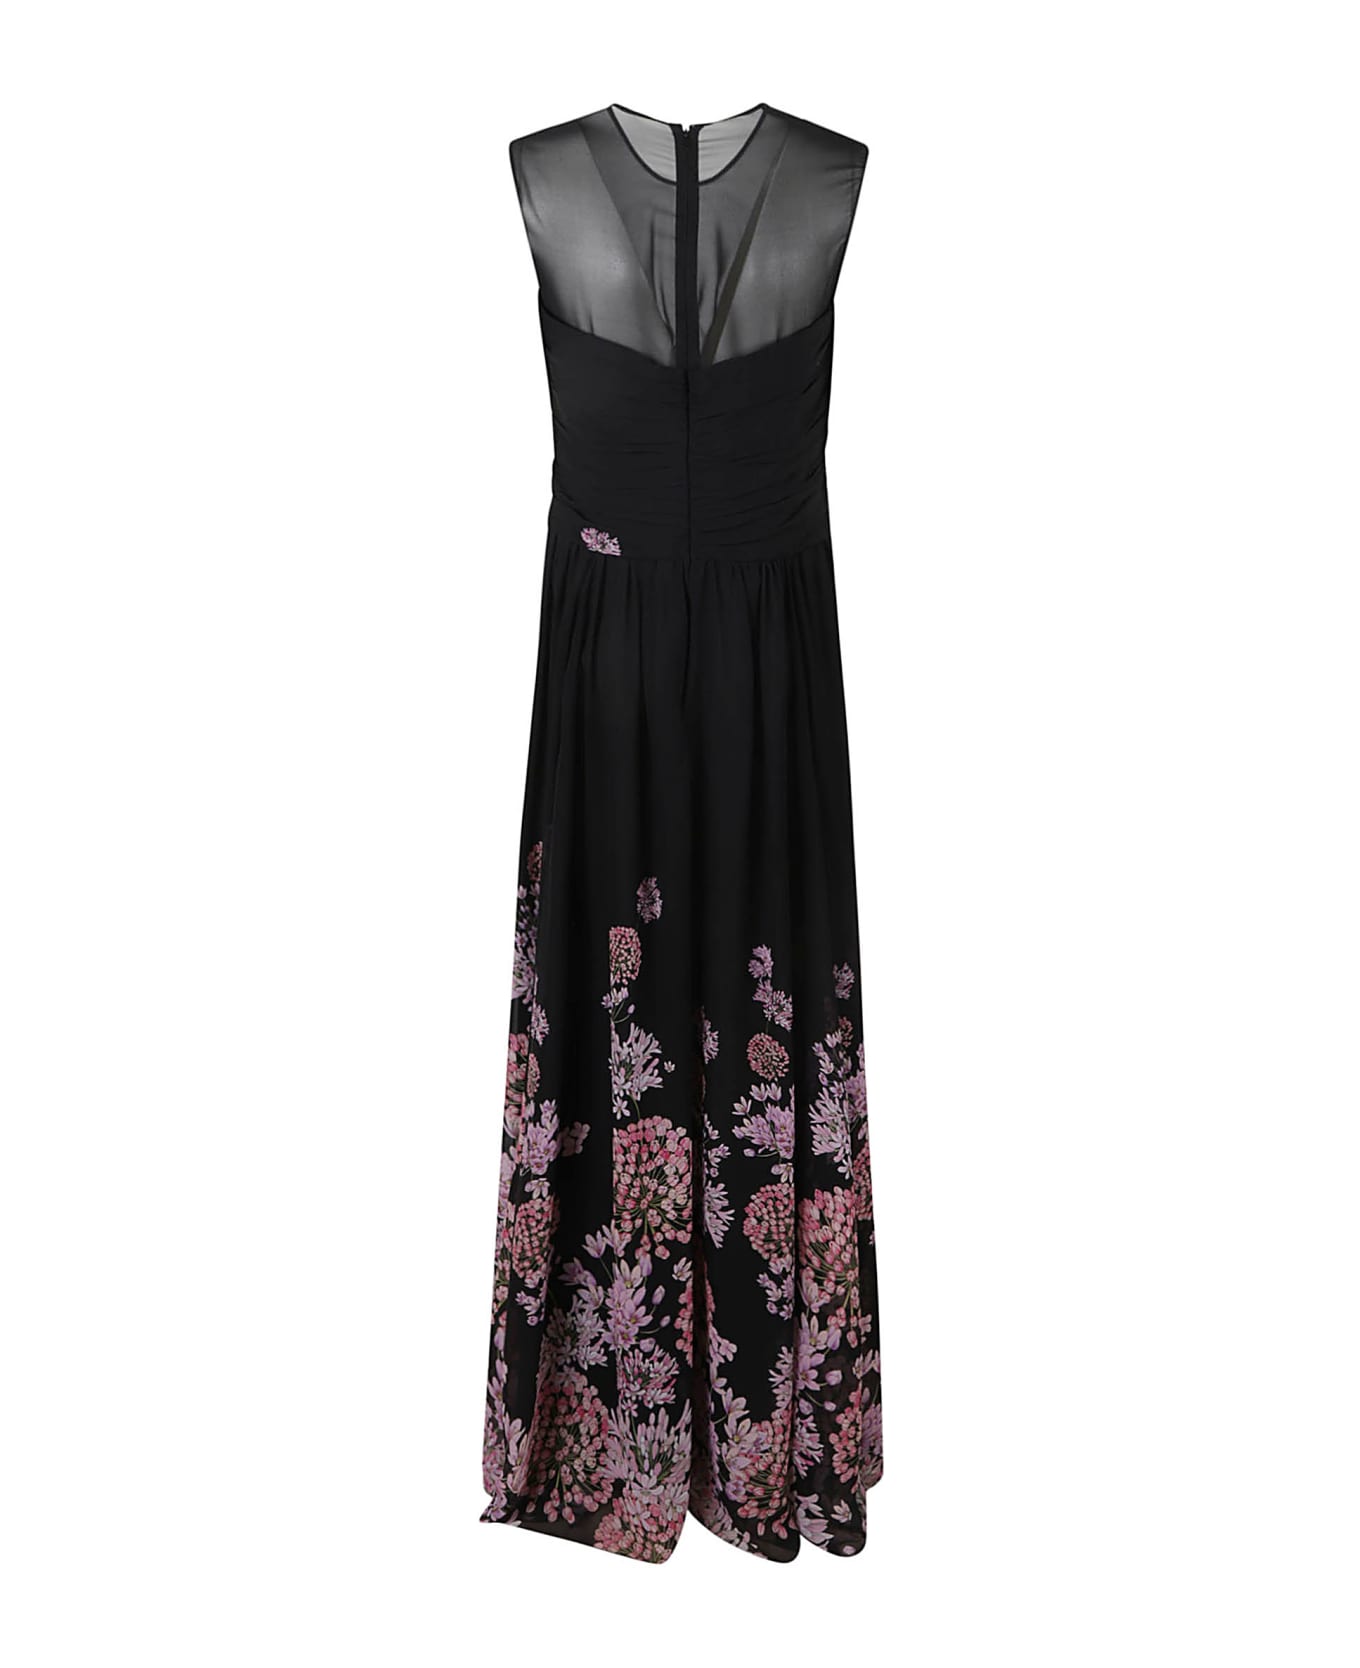 Giambattista Valli Lace Panel Floral Print Sleeveless Dress - Black/Rose